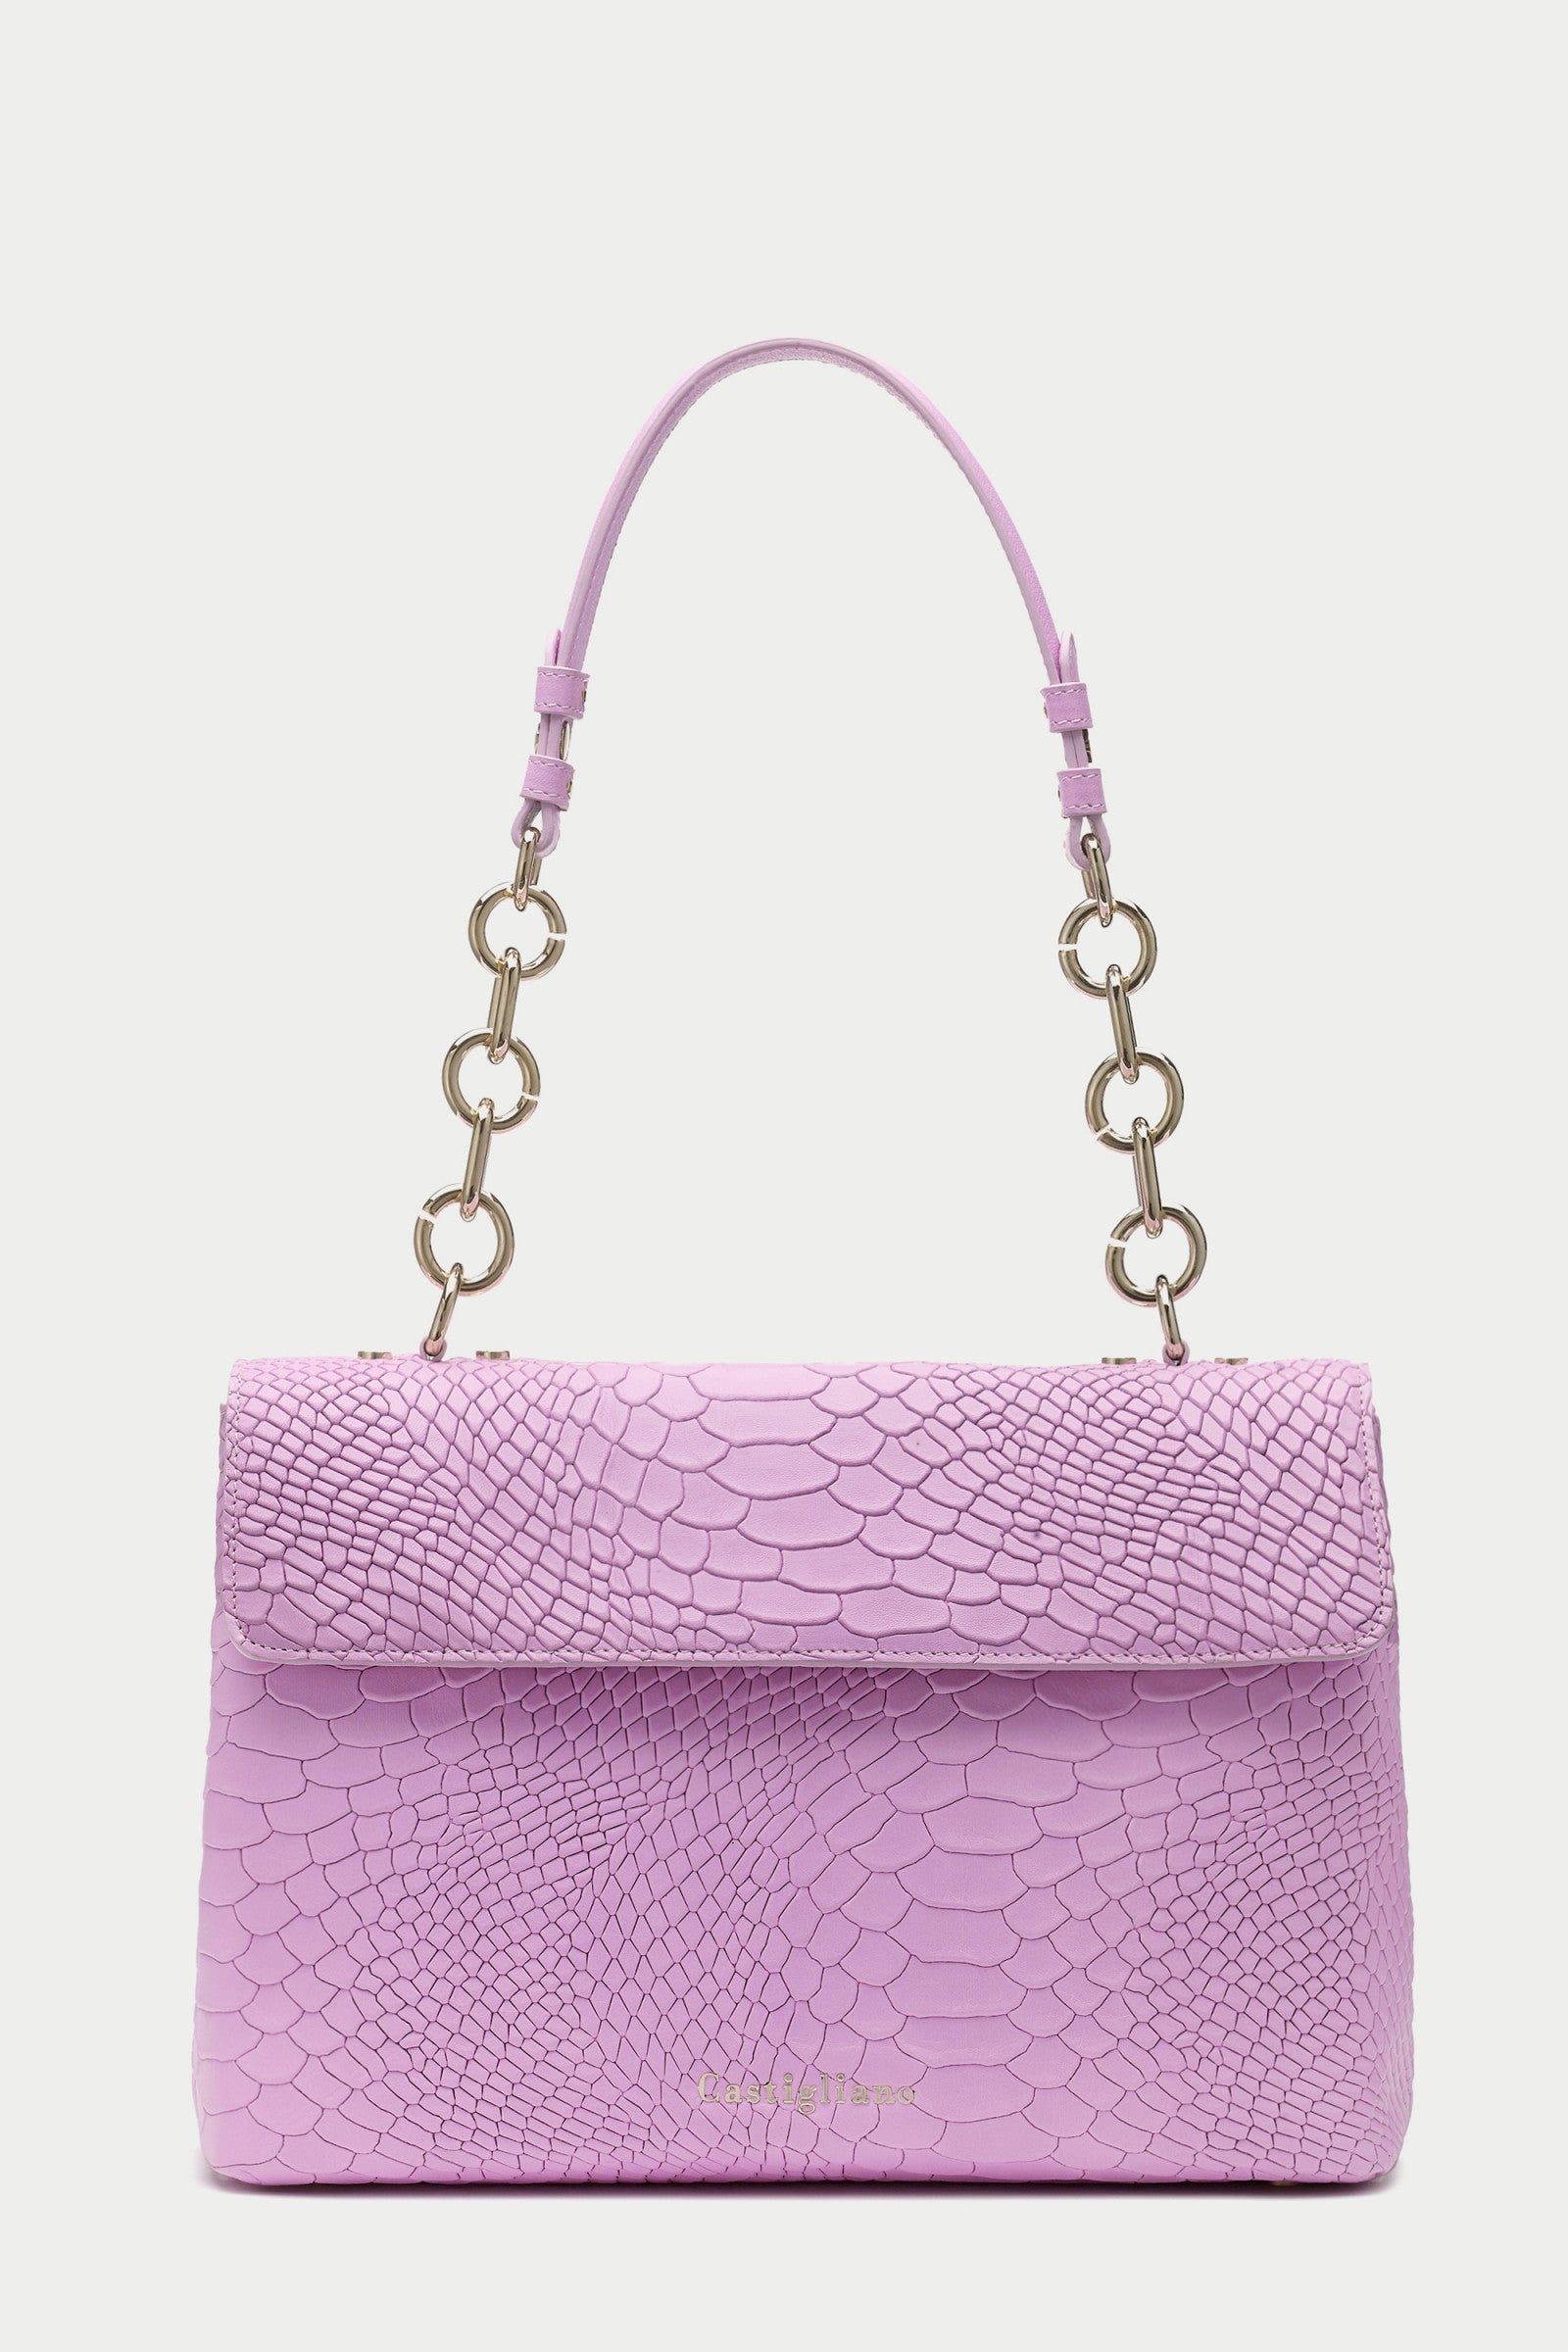 Briella ANACONDA ROSA Pink Leather Handbag